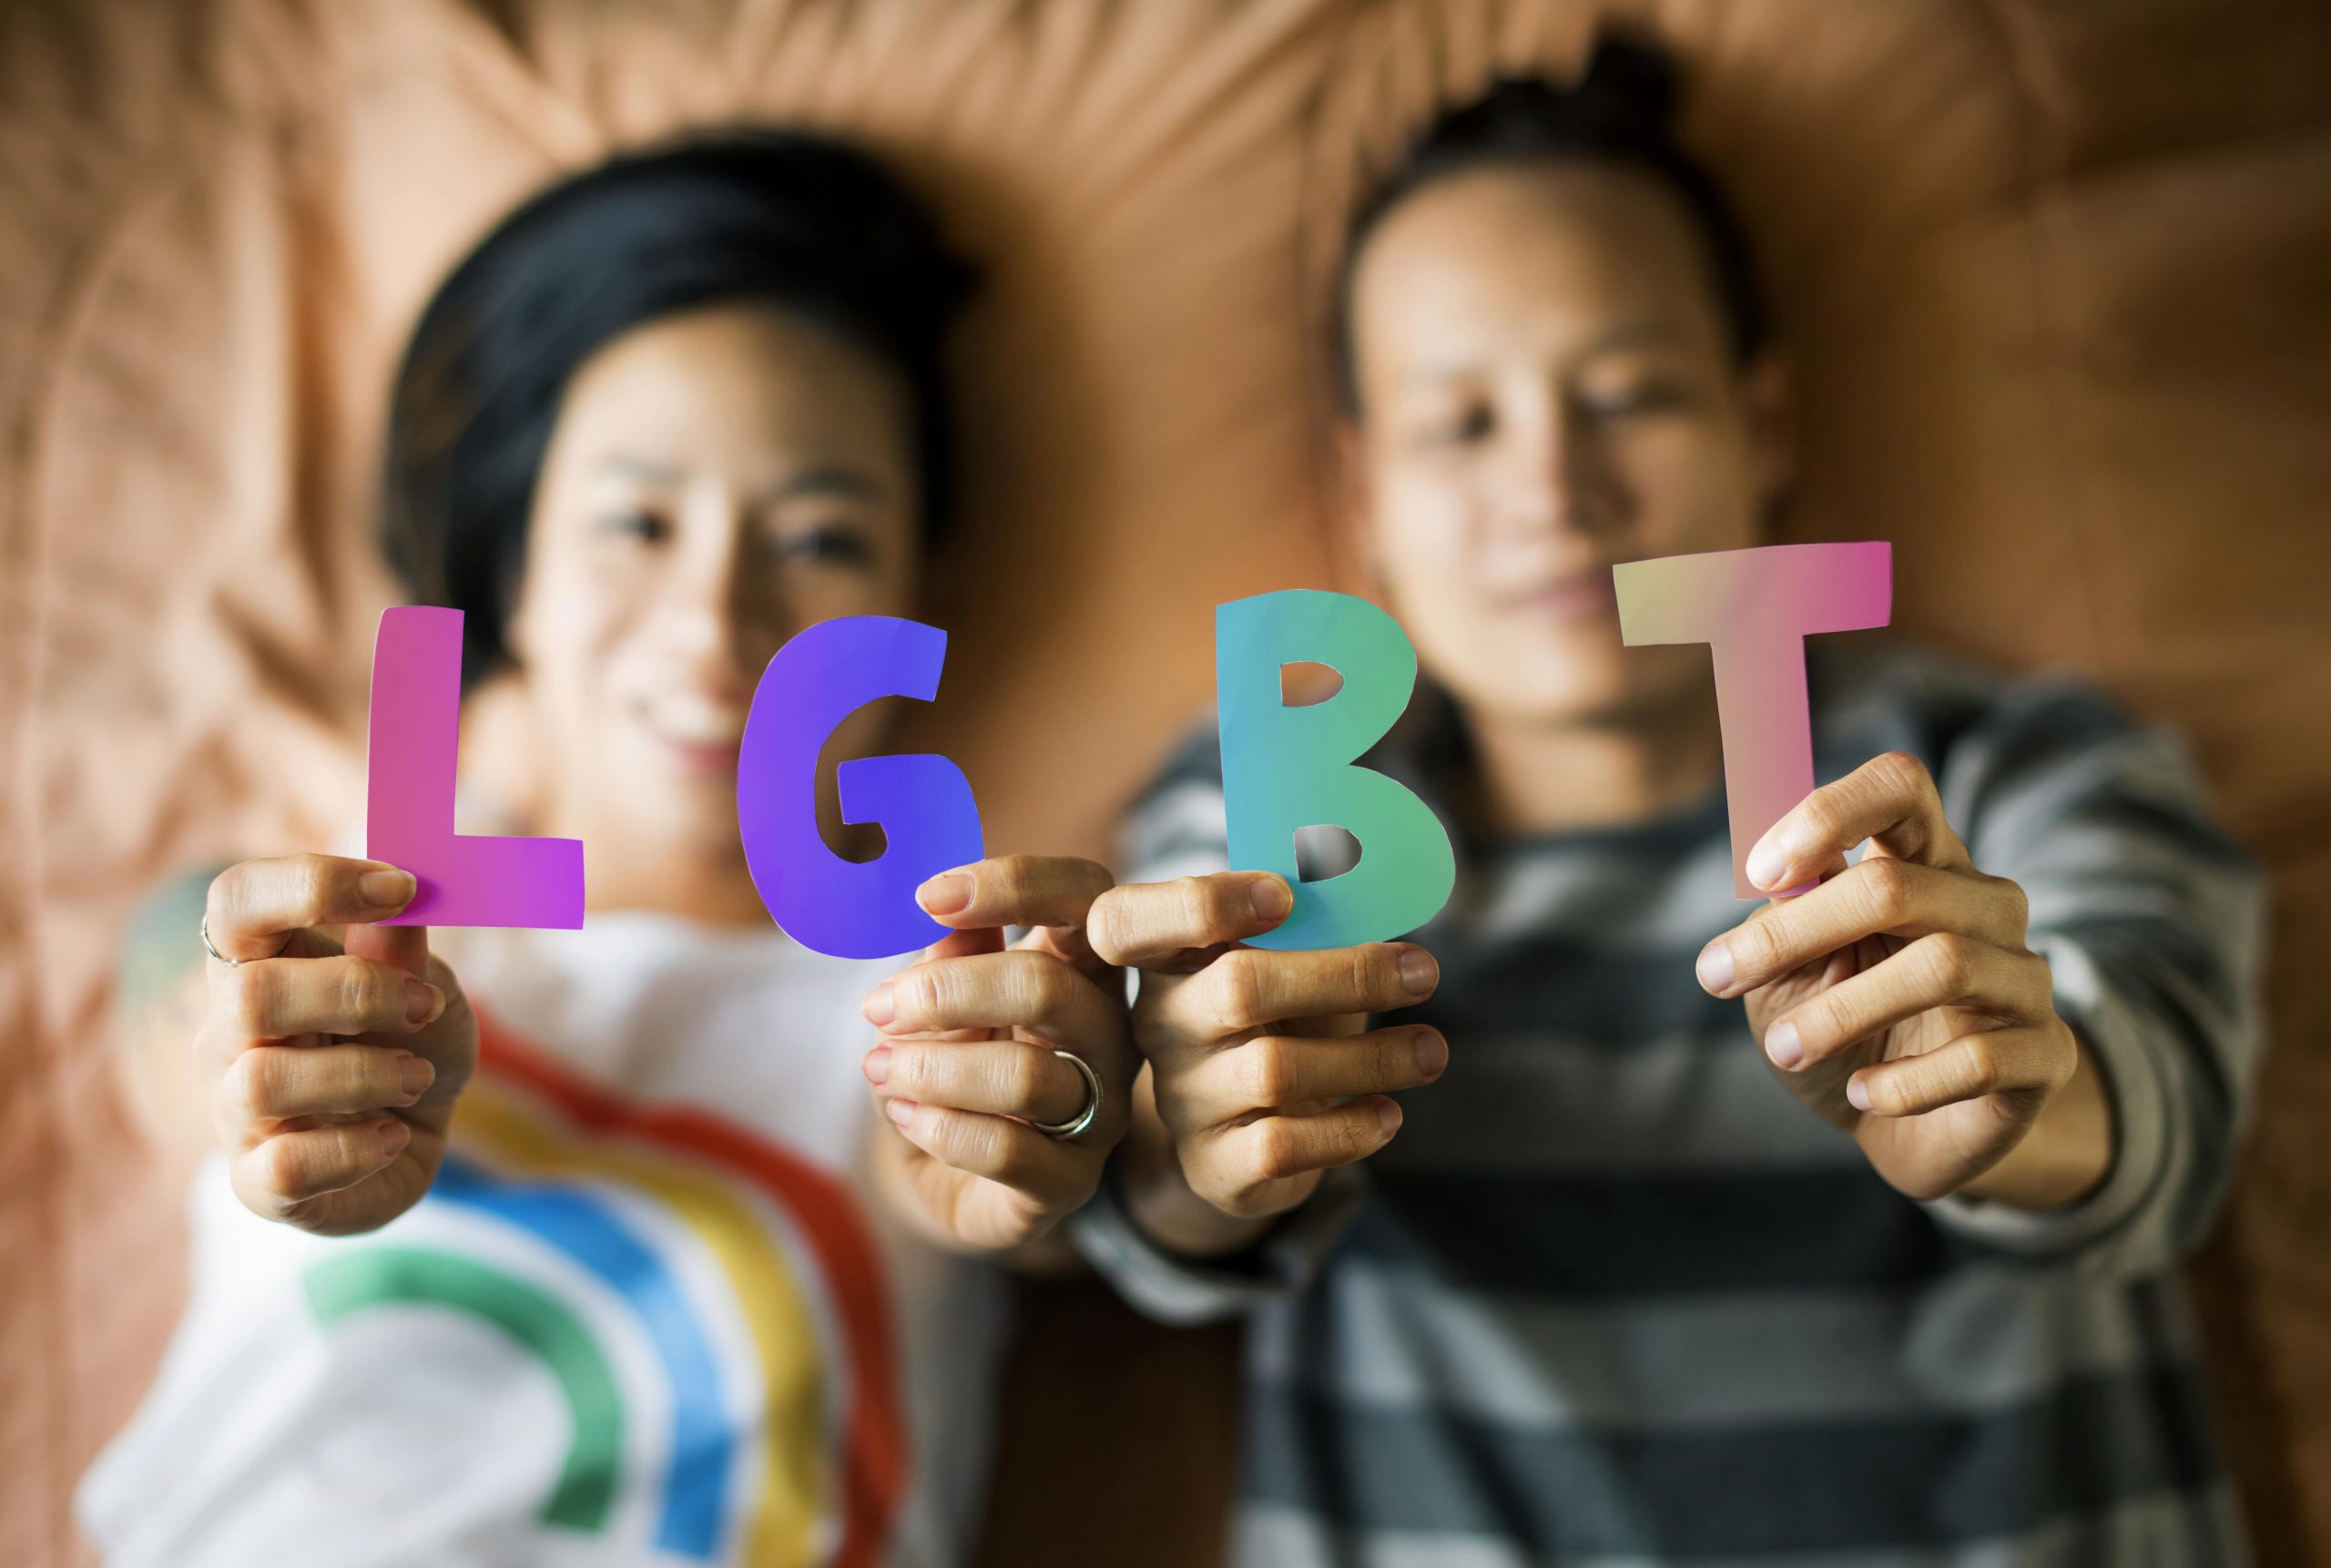 Lesbian couple pursuing parenthood via ROPE method celebrating with LGBT rainbow letters